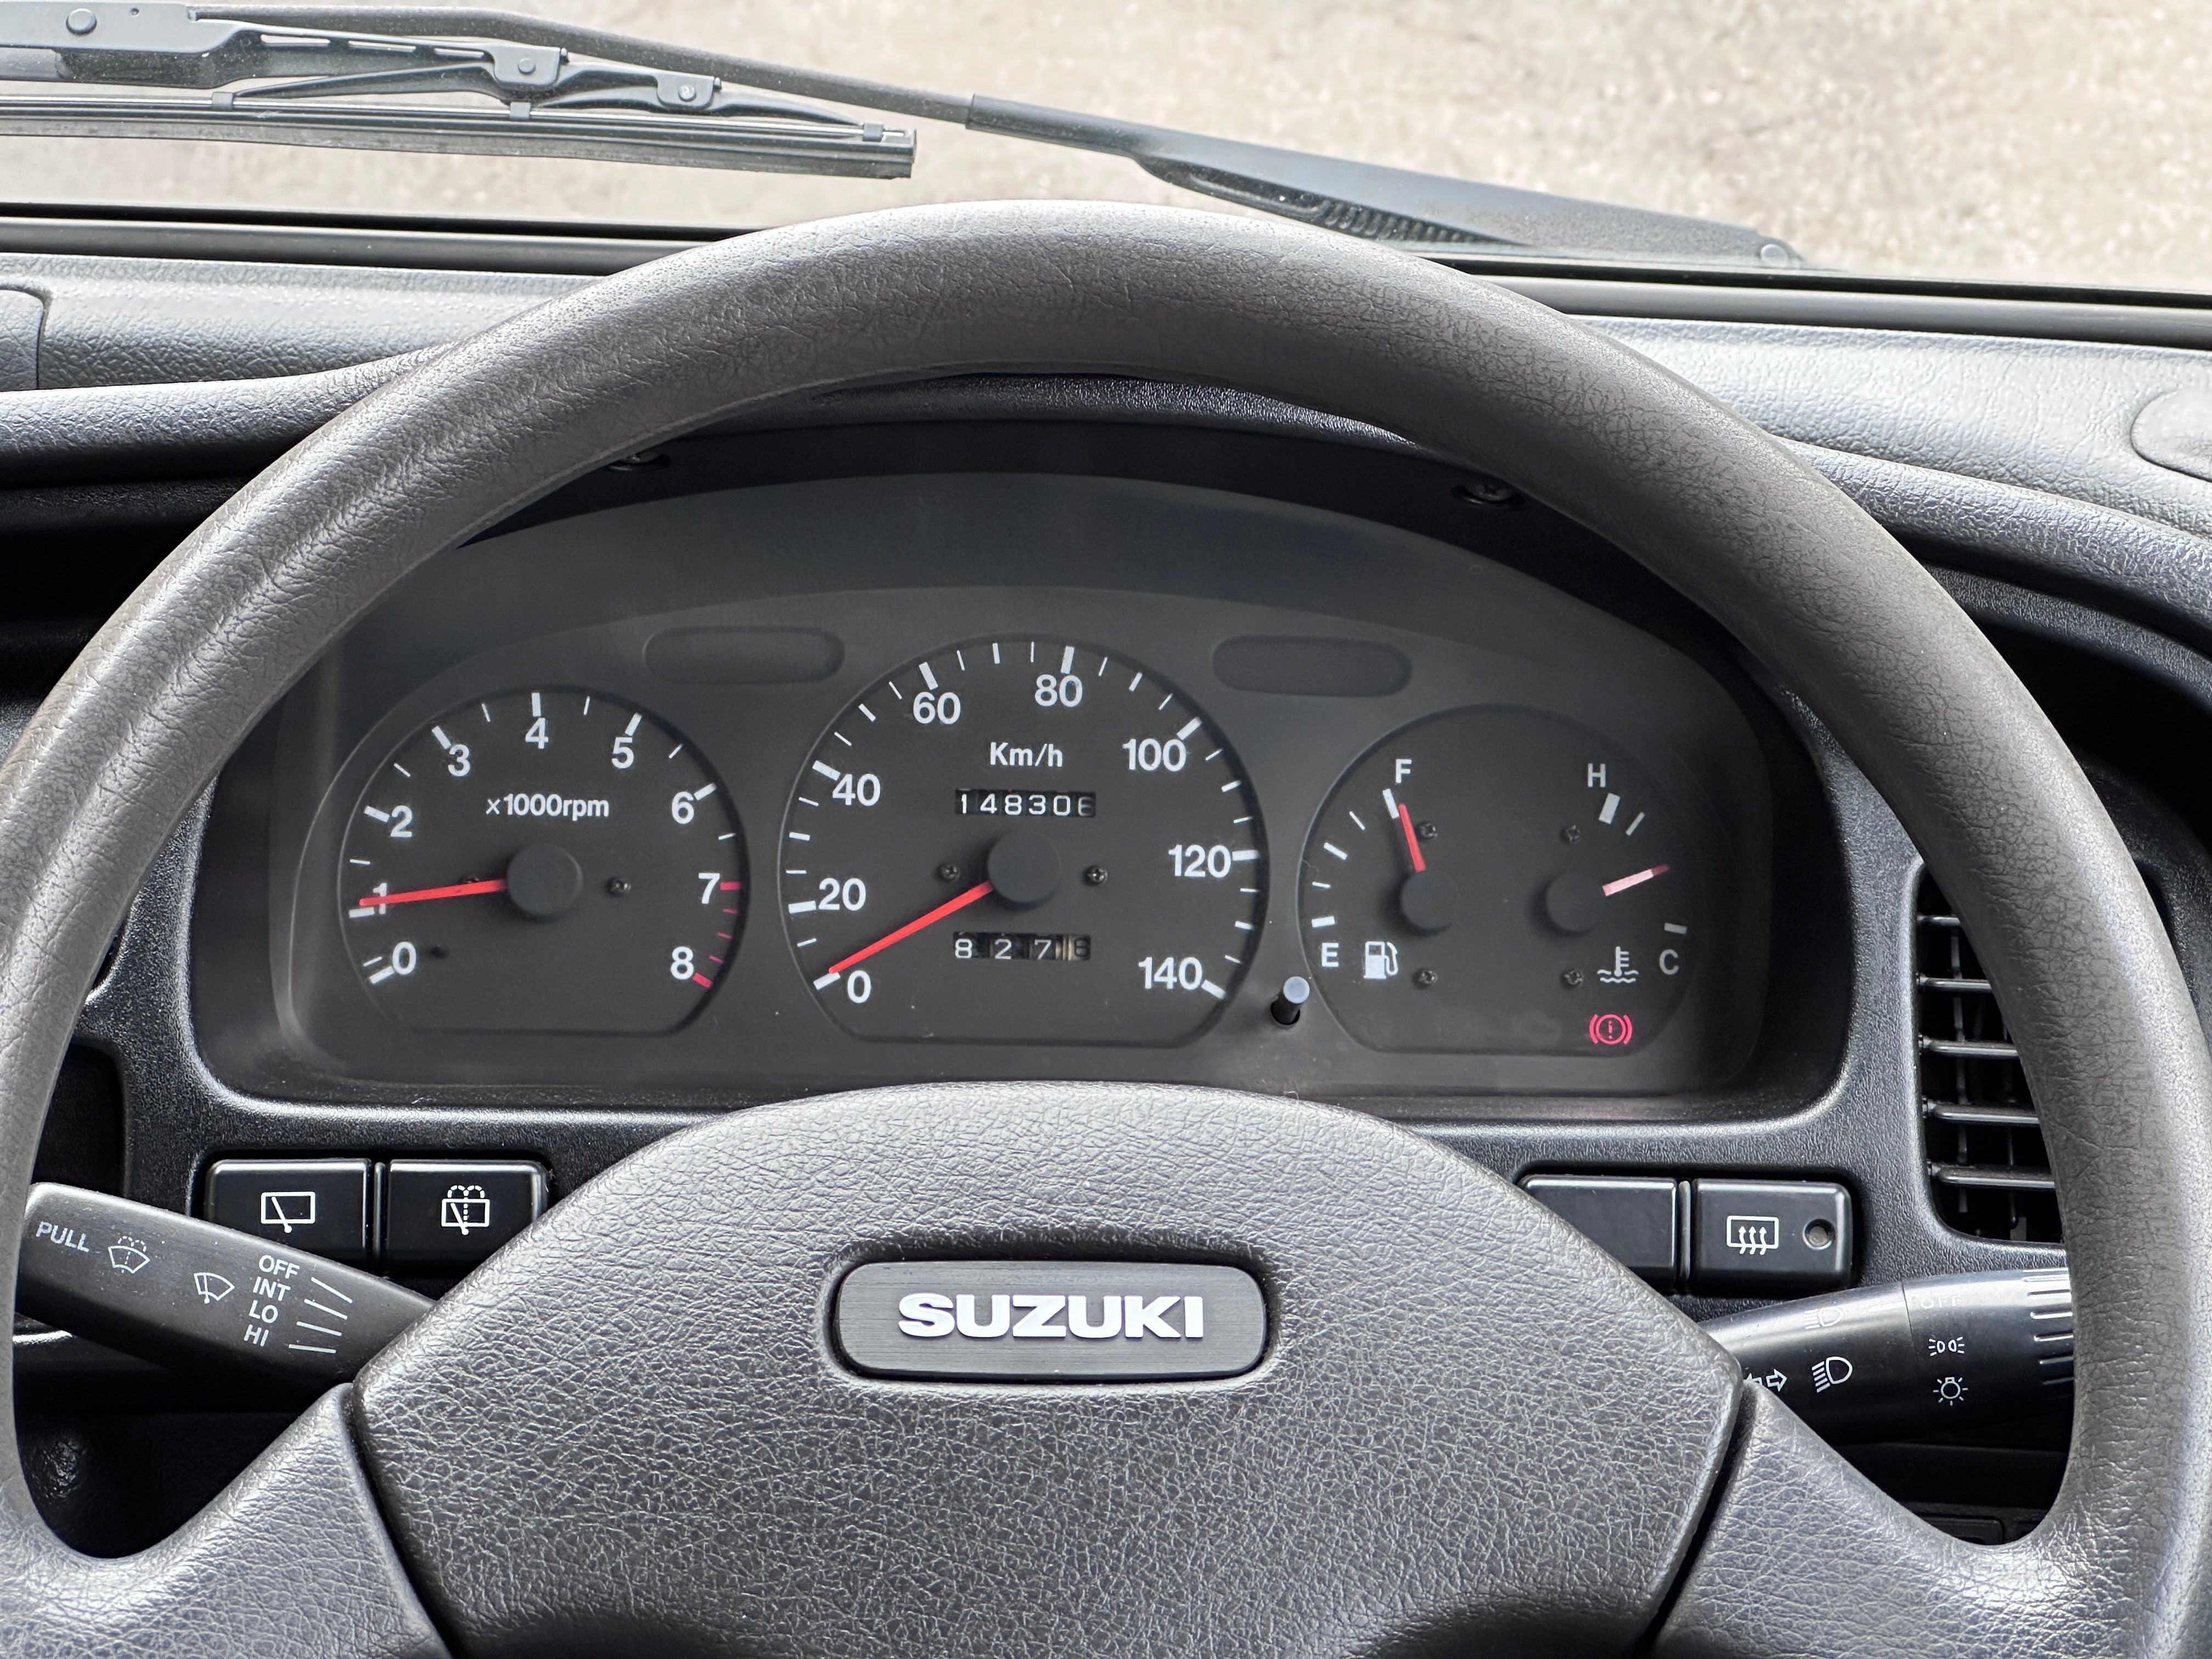 1996 Suzuki Every Kei Van